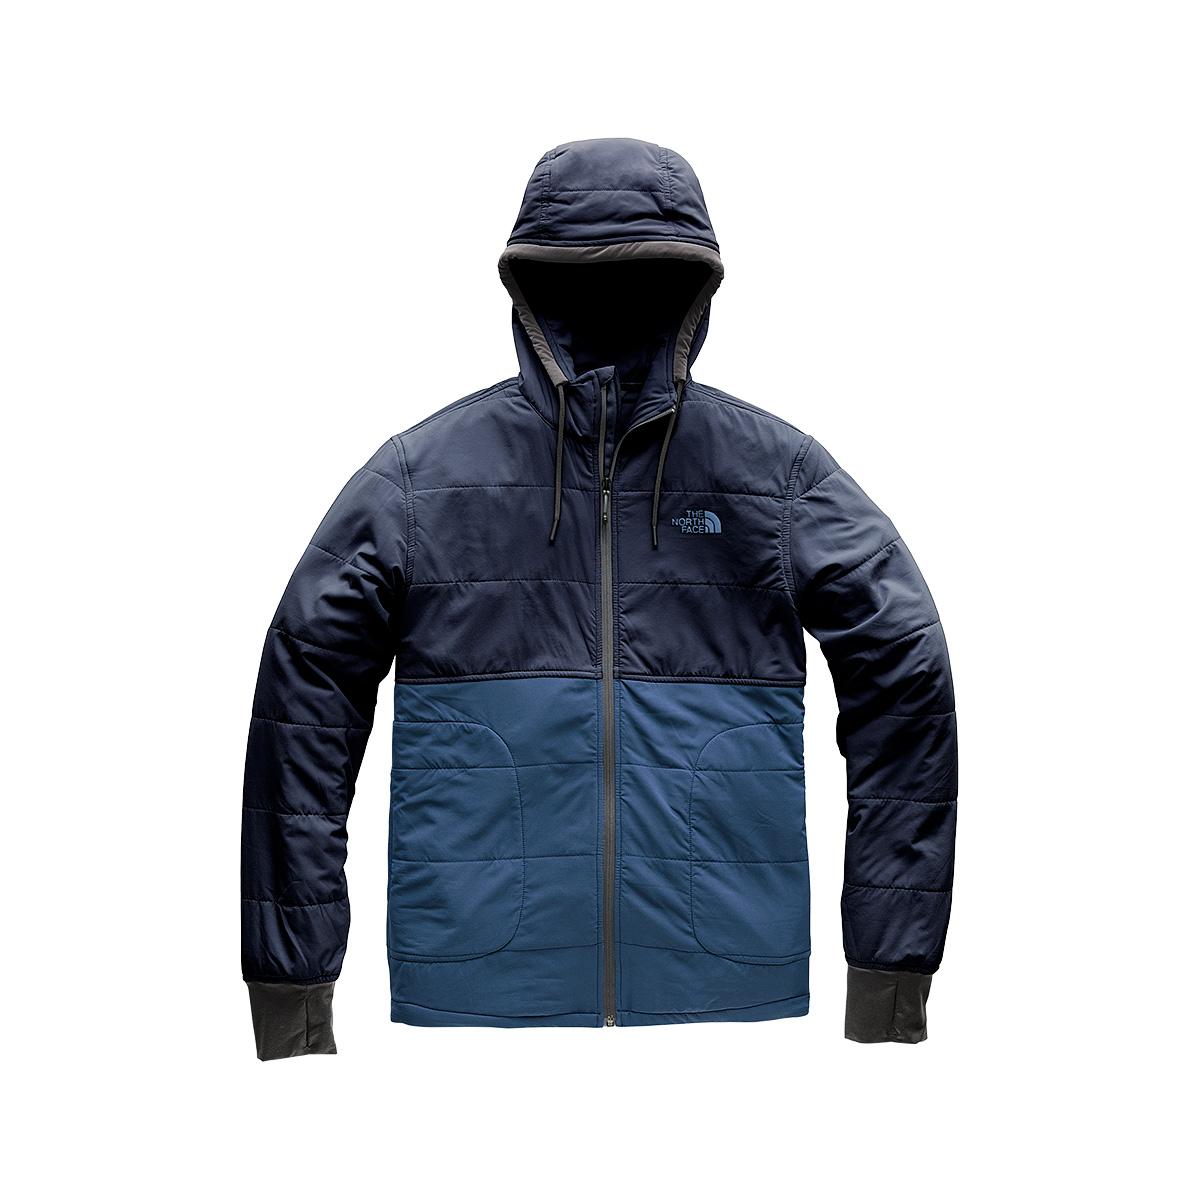 Mast General Store | Men's Mountain Sweatshirt 2.0 Full-Zip Hoodie